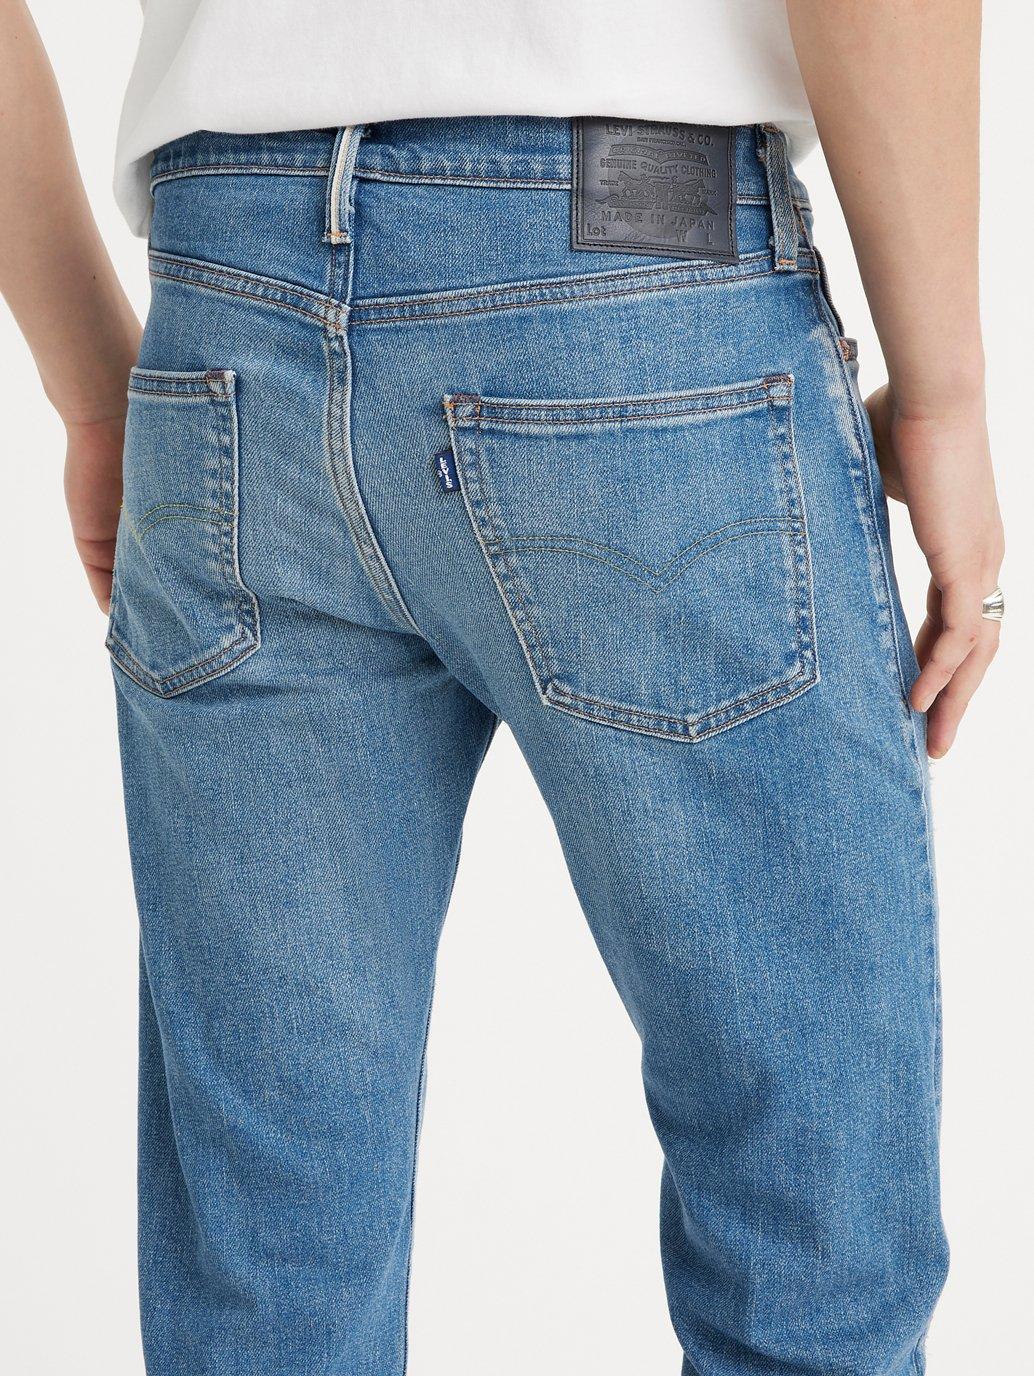 Buy Levi's® Men's Made in Japan 511™ Jeans | Levi’s® Official Online ...